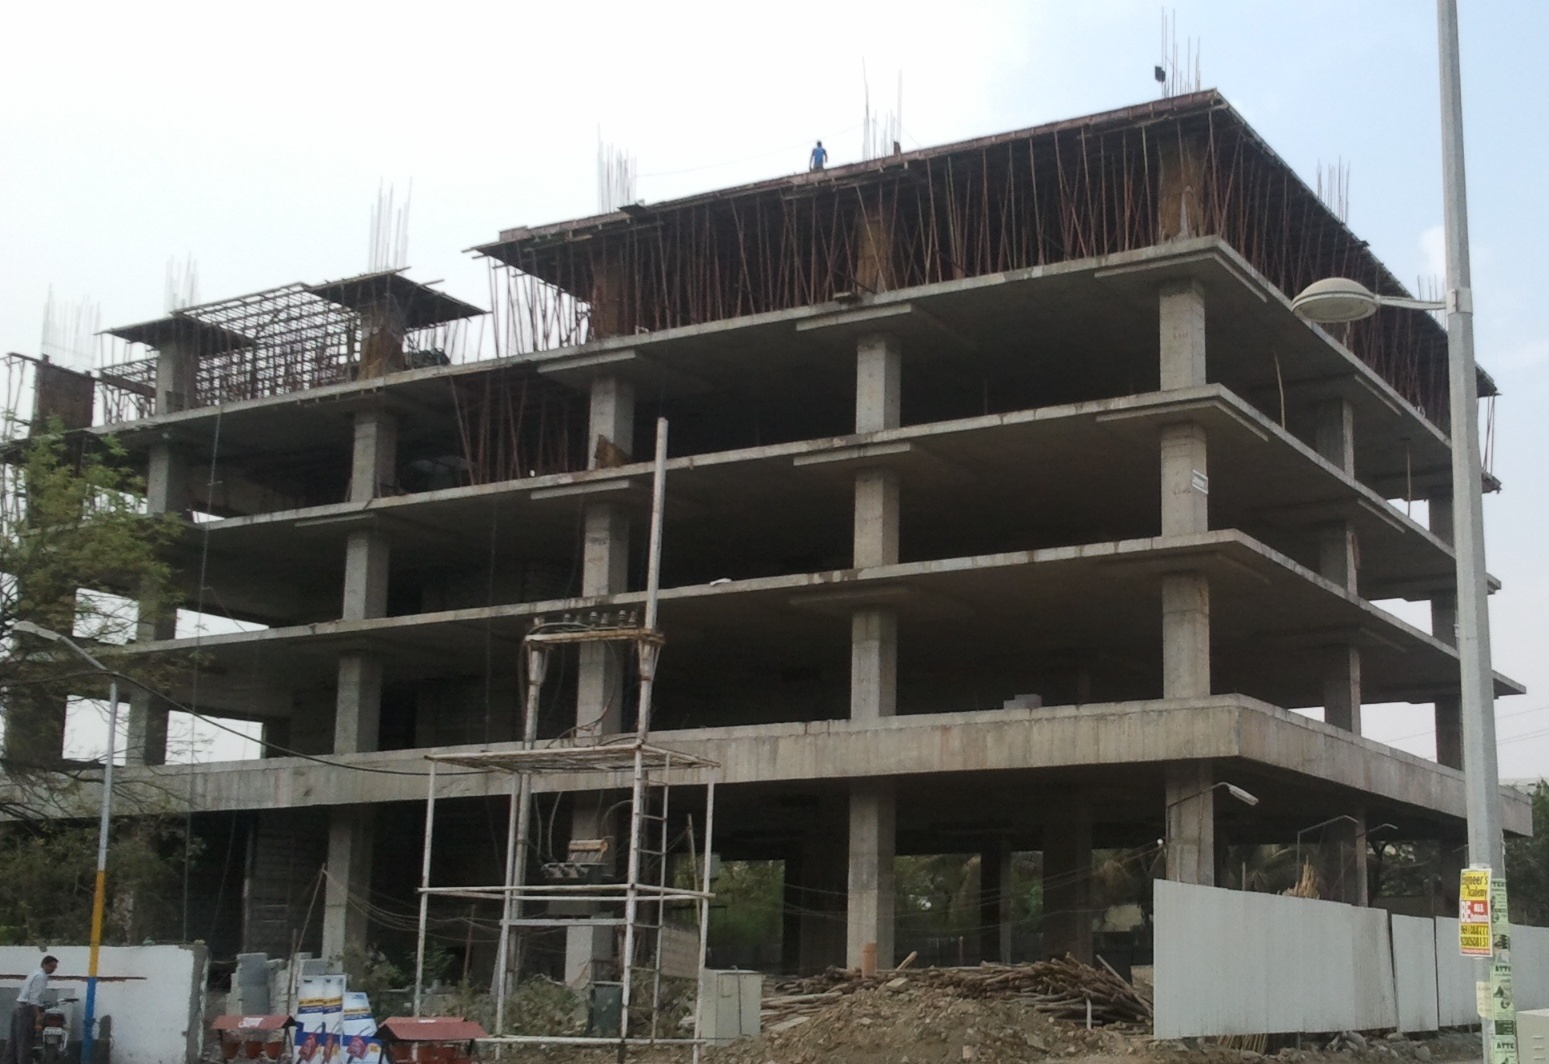 under construction mult story building at talawali chanda indore